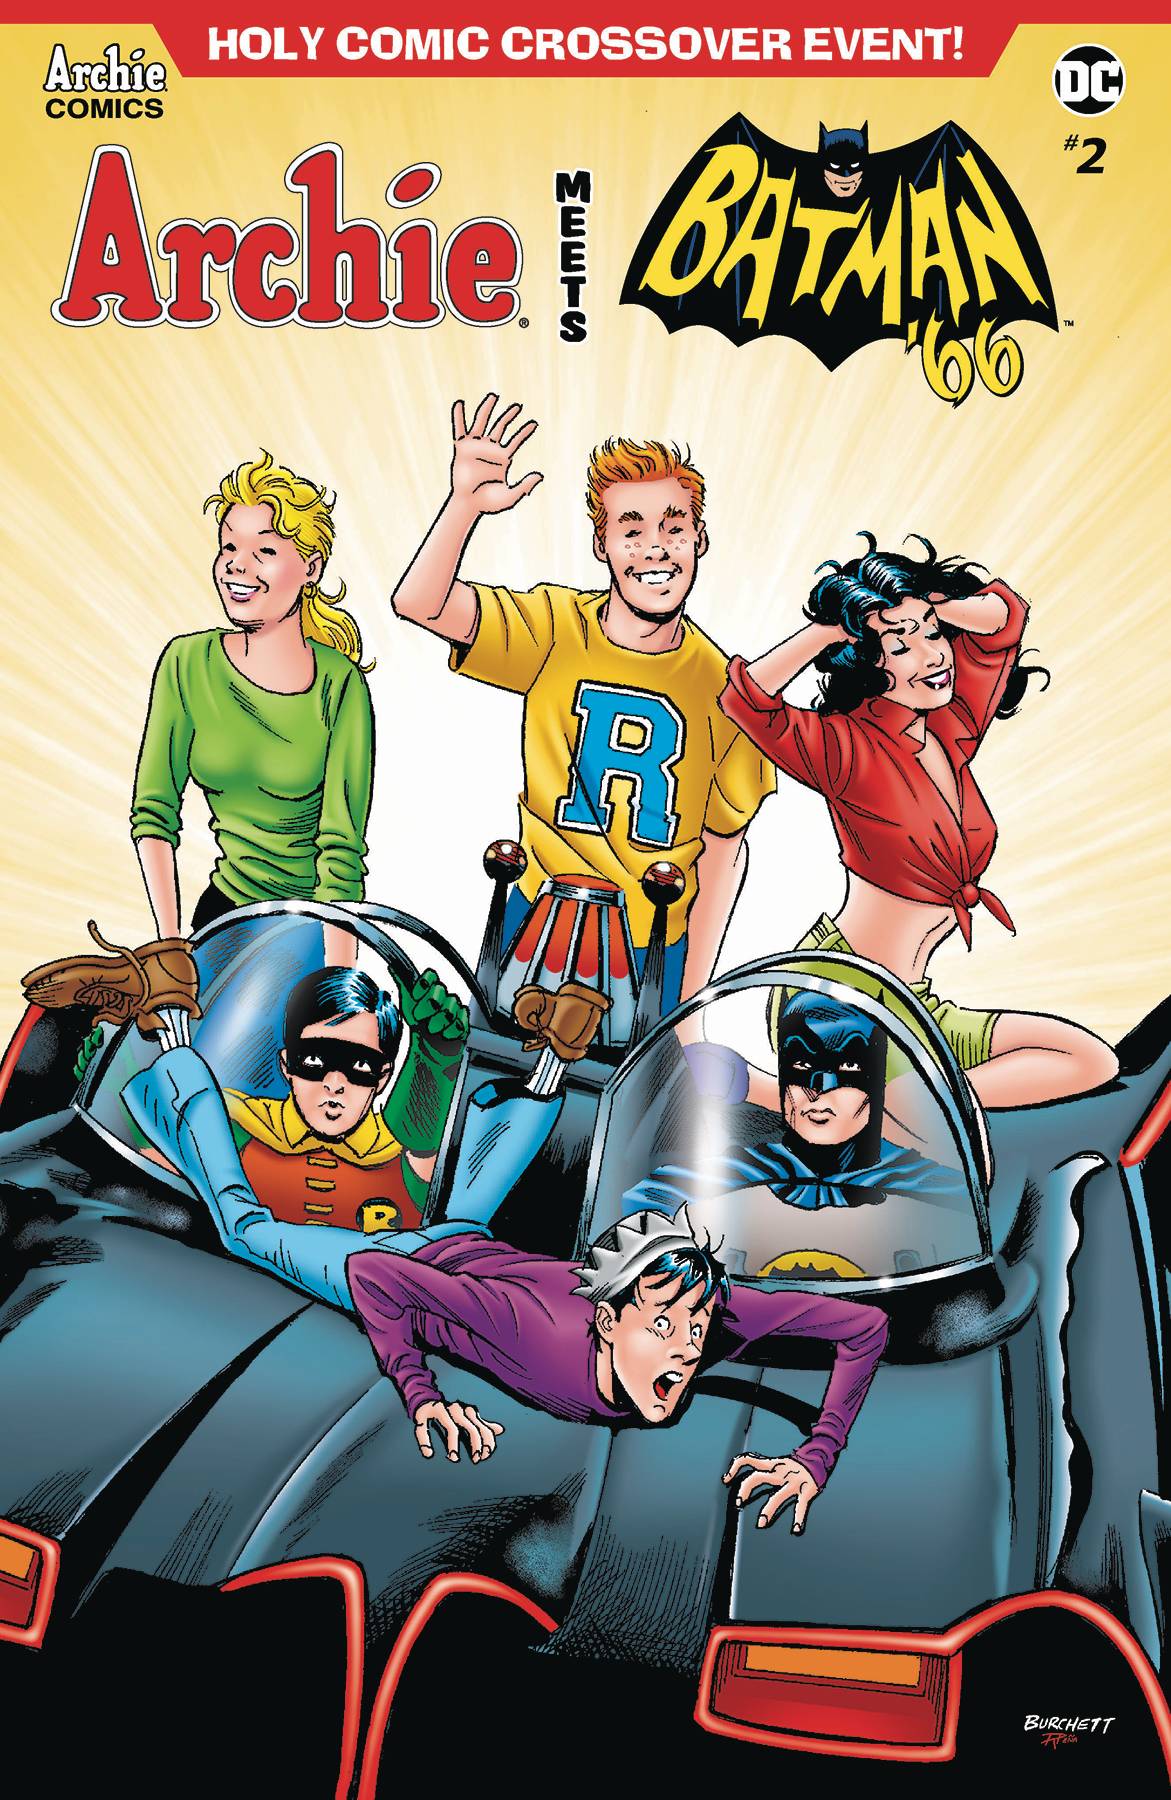 Archie Meets Batman 66 #2 Cover B Burchett